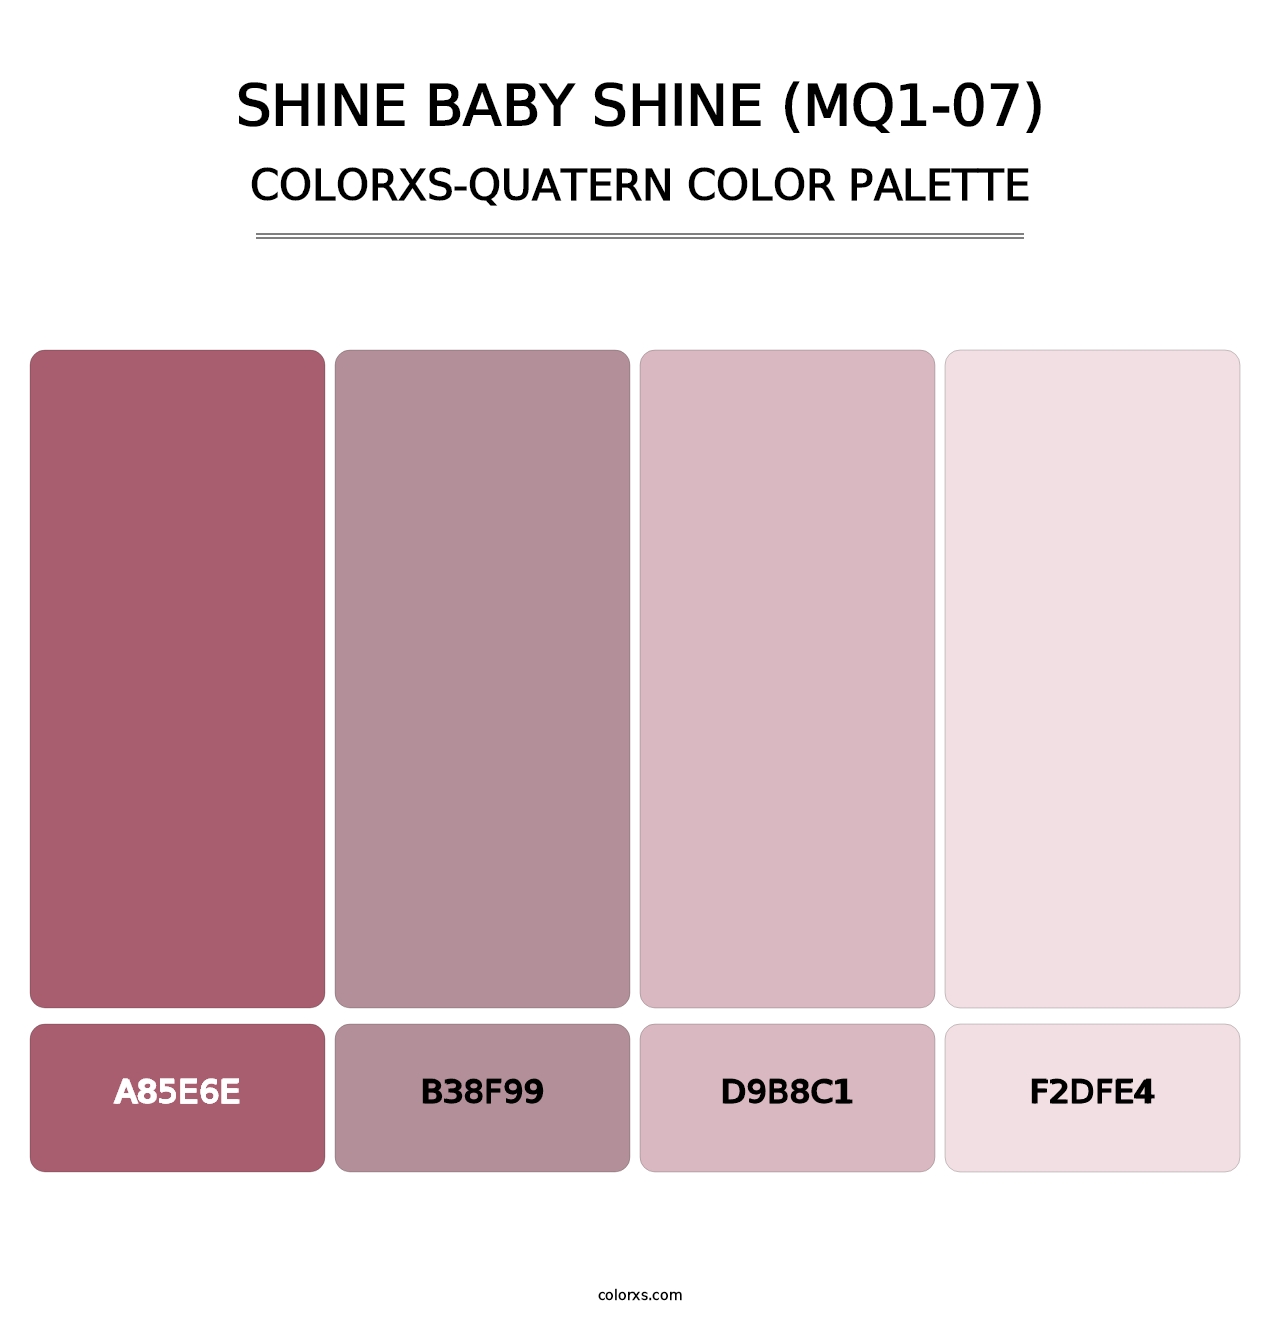 Shine Baby Shine (MQ1-07) - Colorxs Quatern Palette